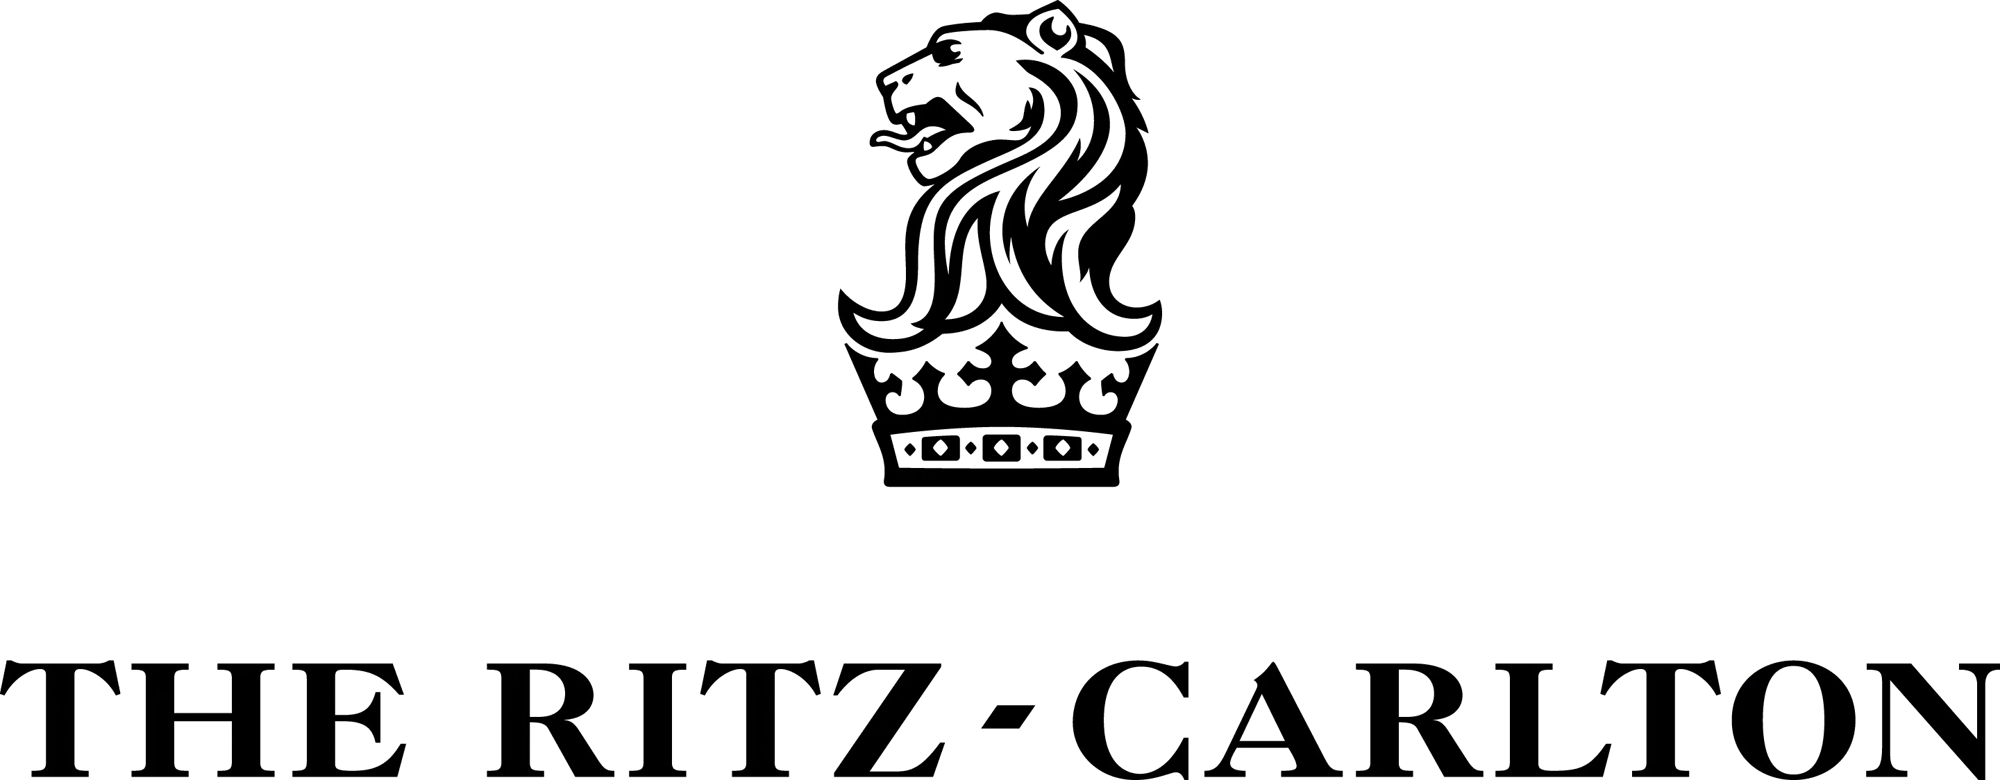 Ritz_Carlton_logo